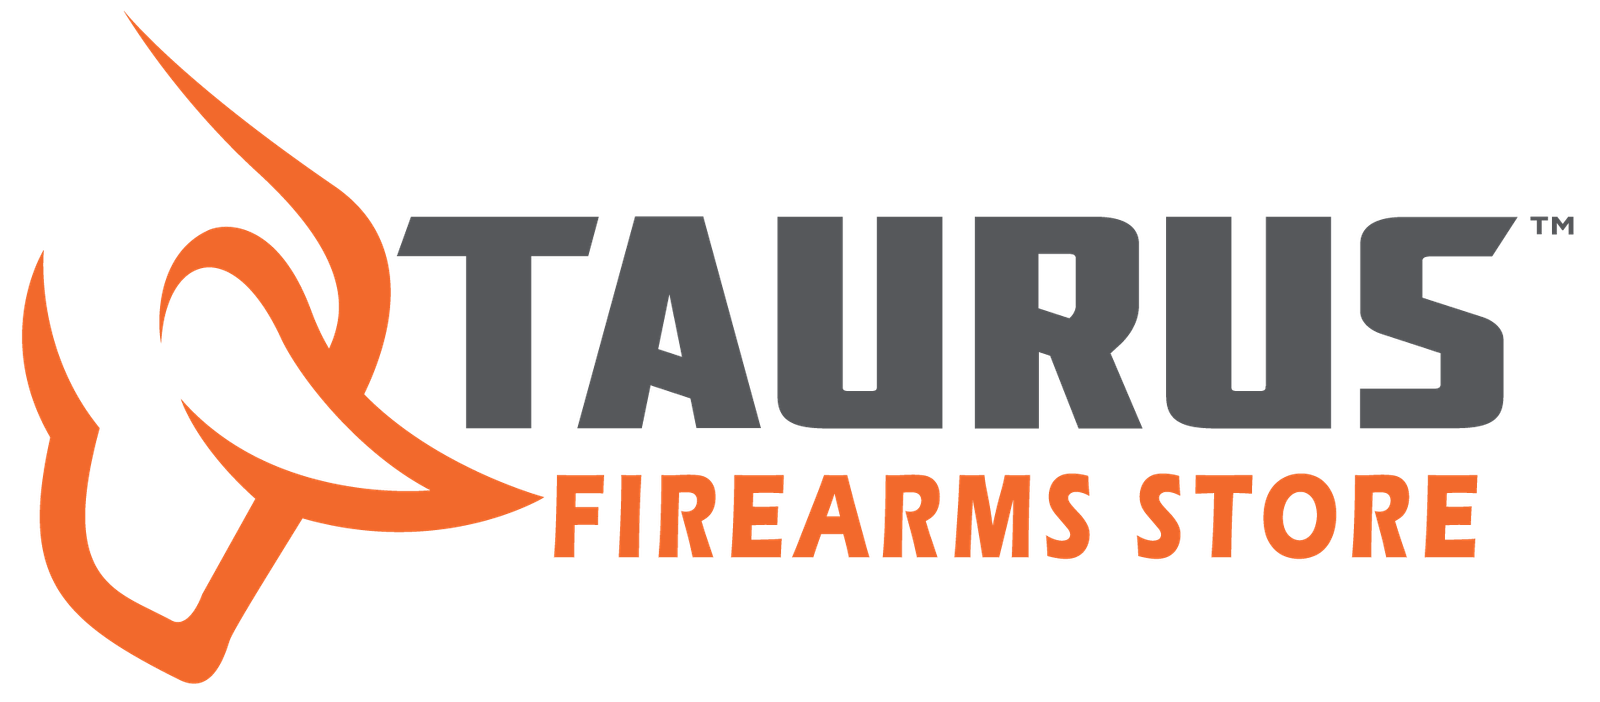 Taurus Firearms USA